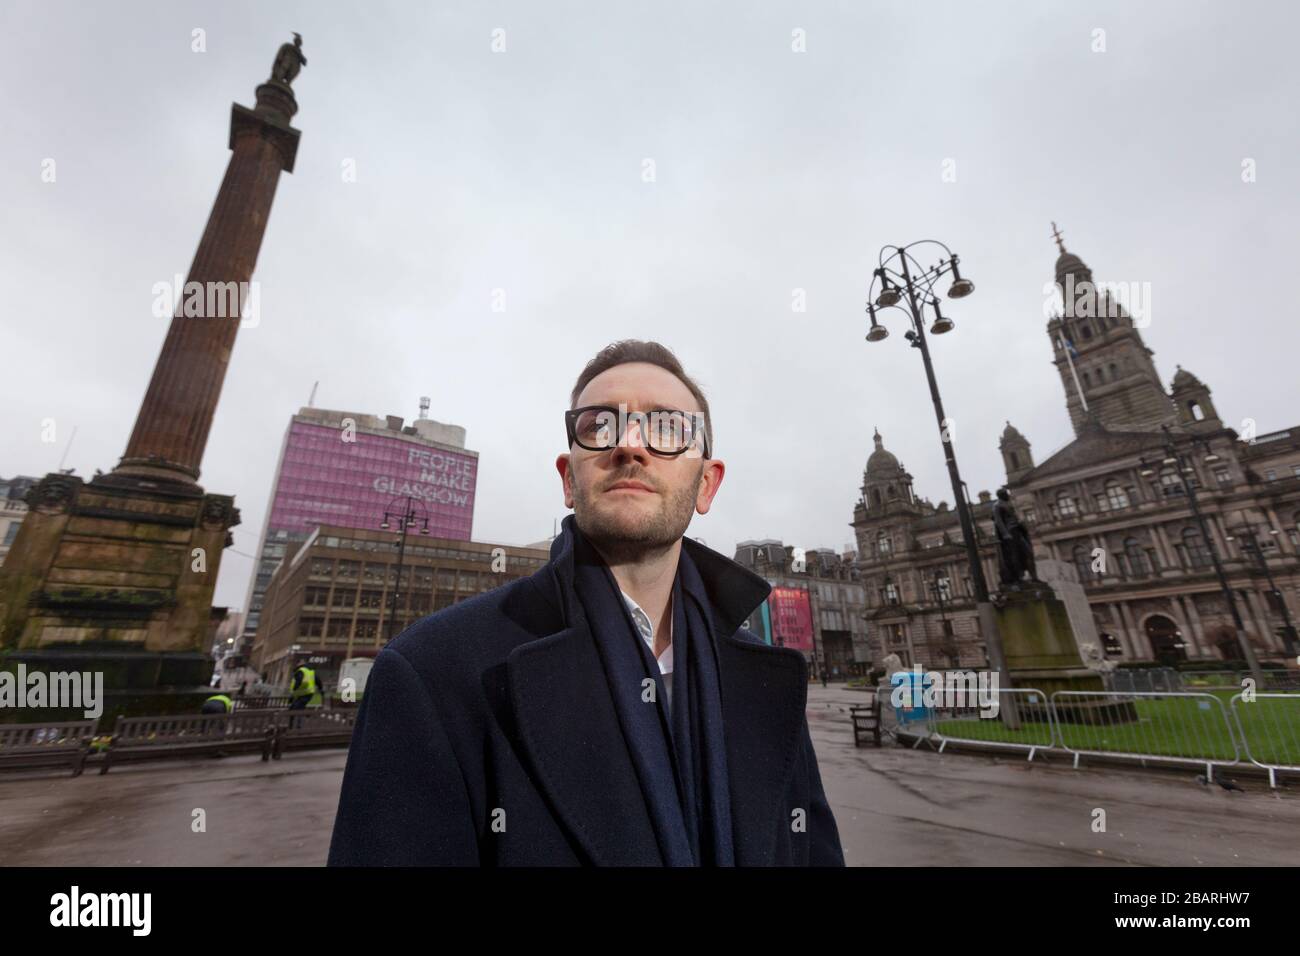 Chris Stark Director Ejecutivo del Comité de Cambio Climático fotografiado en George Square, Glasgow Foto de stock